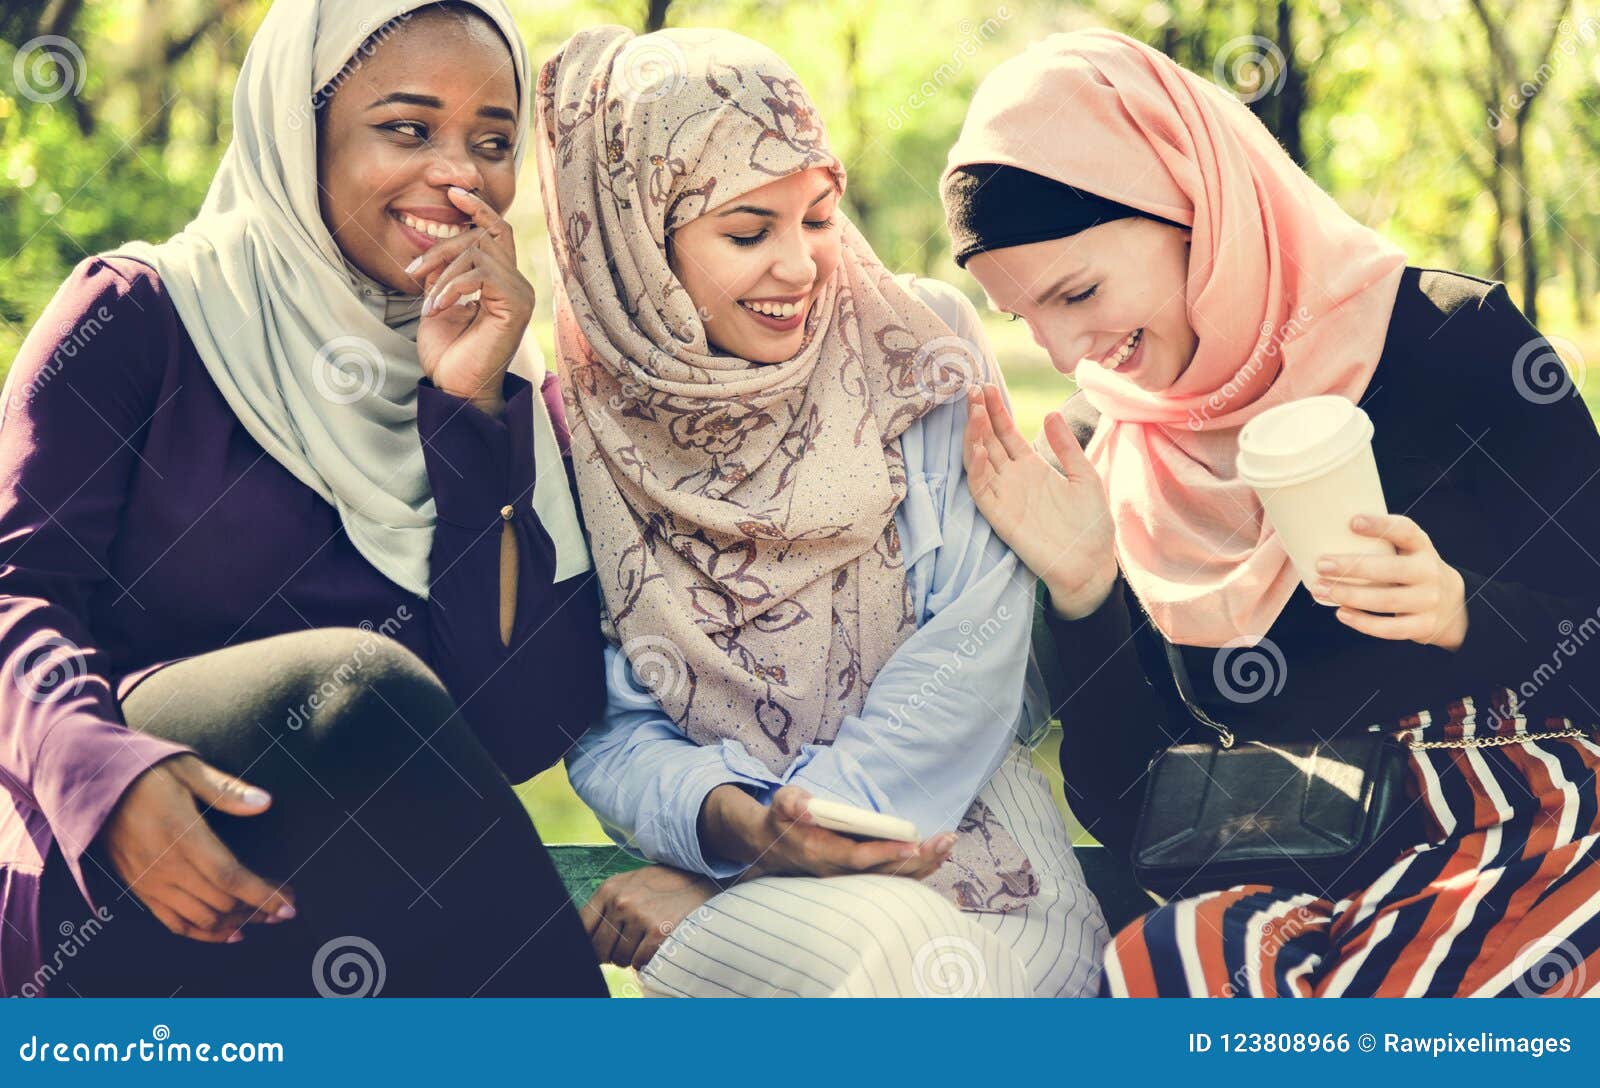 islamic women friends talking and having fun